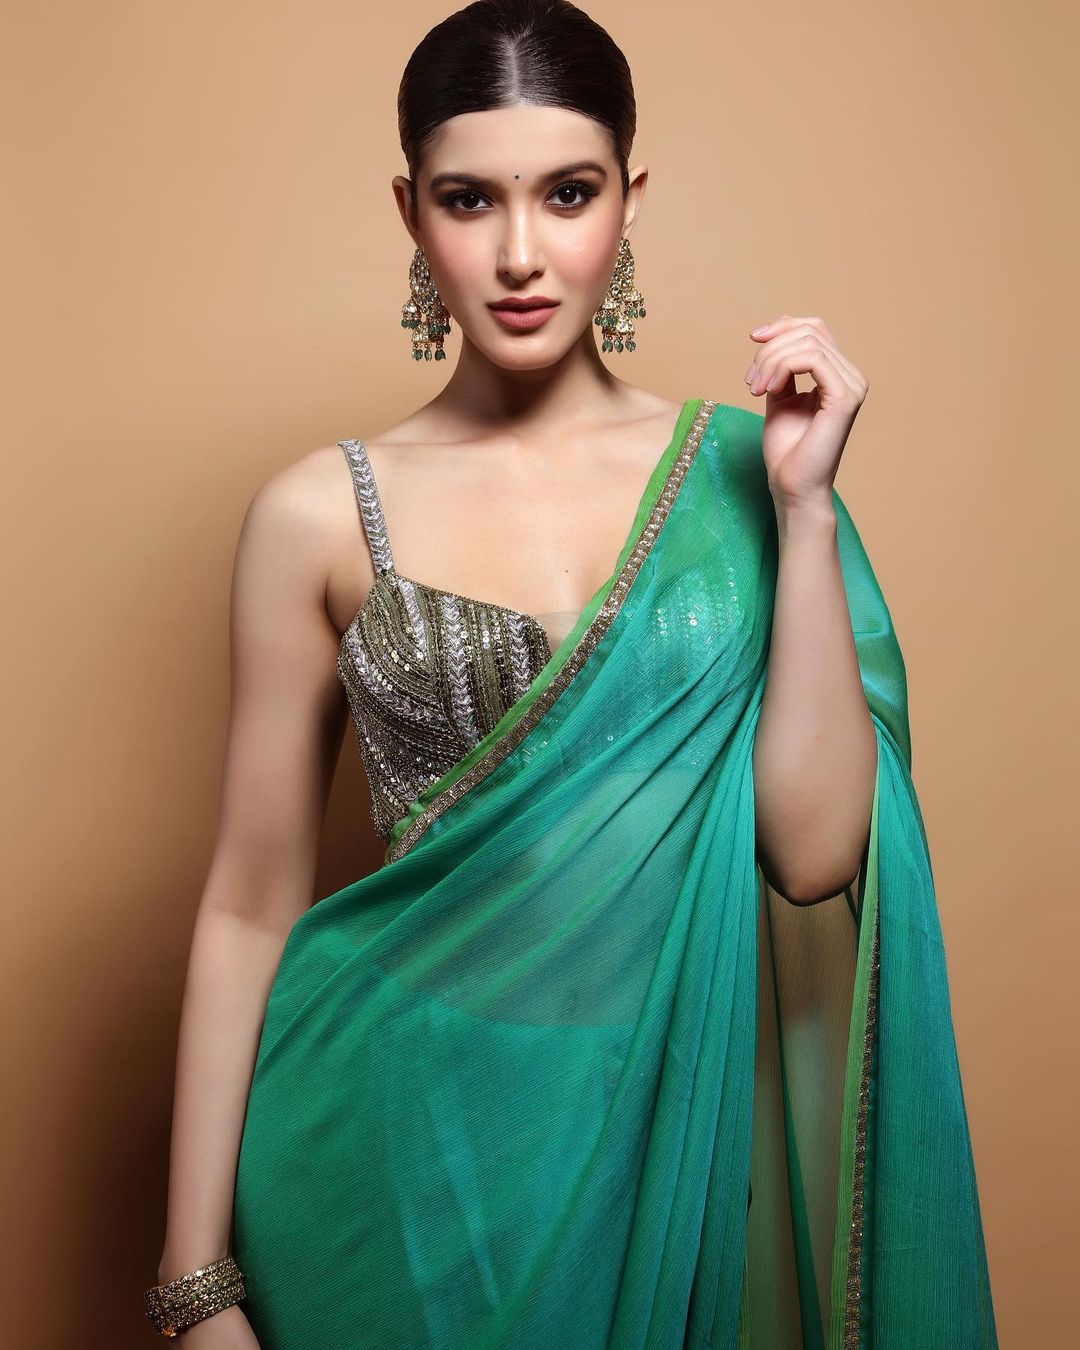 Shanaya Kapoor looks glorious in the green saree